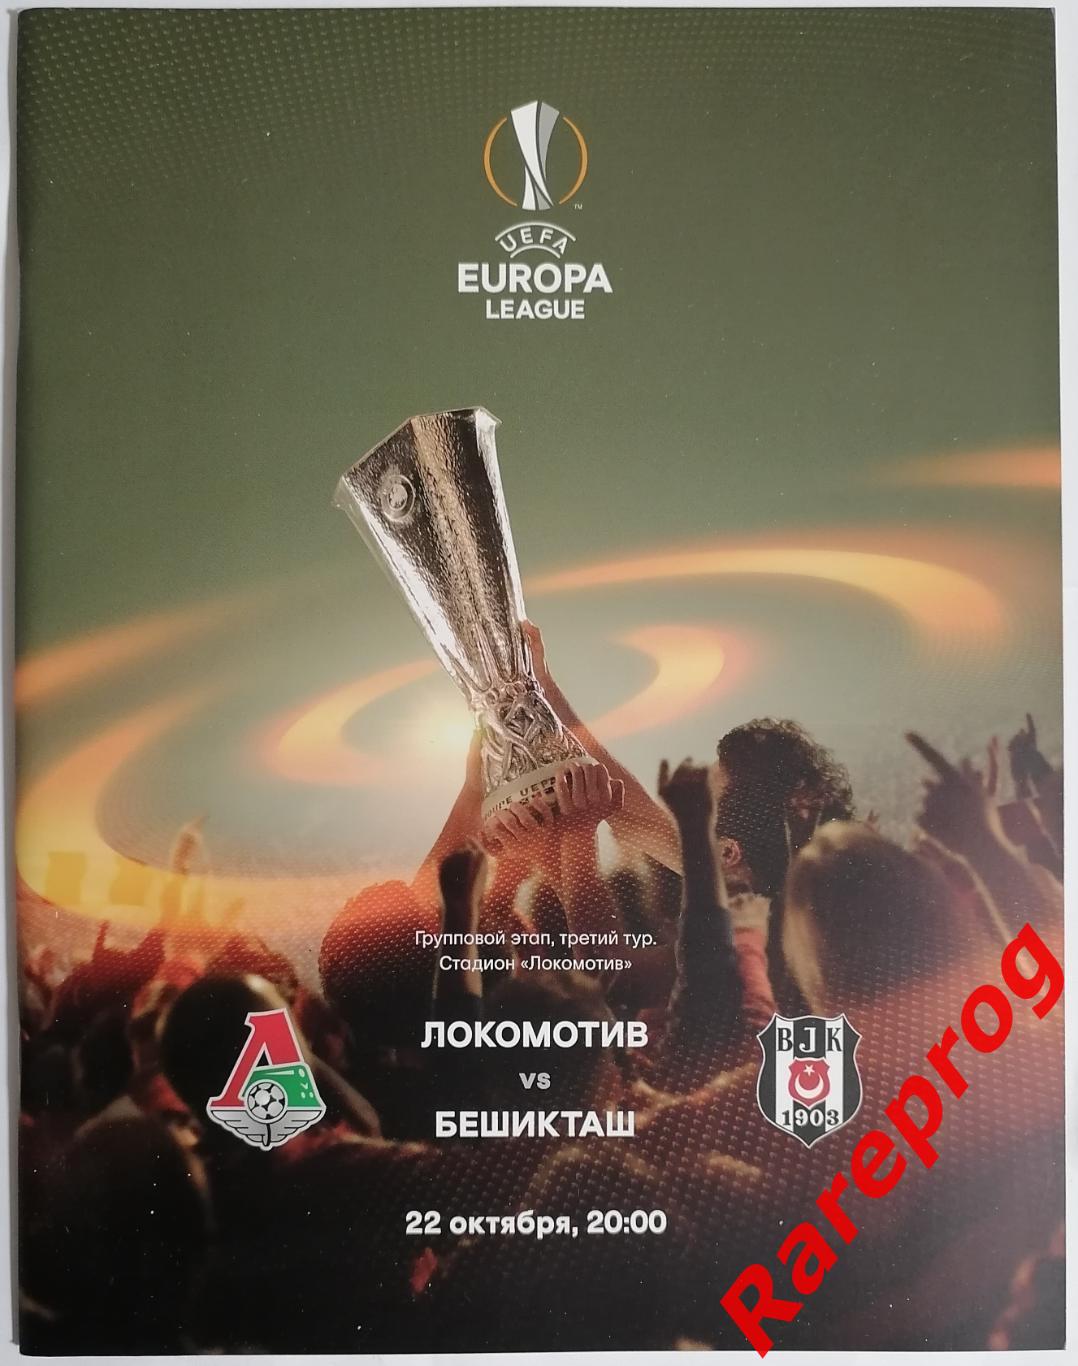 Локомотив Москва Россия - Бешикташ Турция 2015 кубок ЛЕ УЕФА